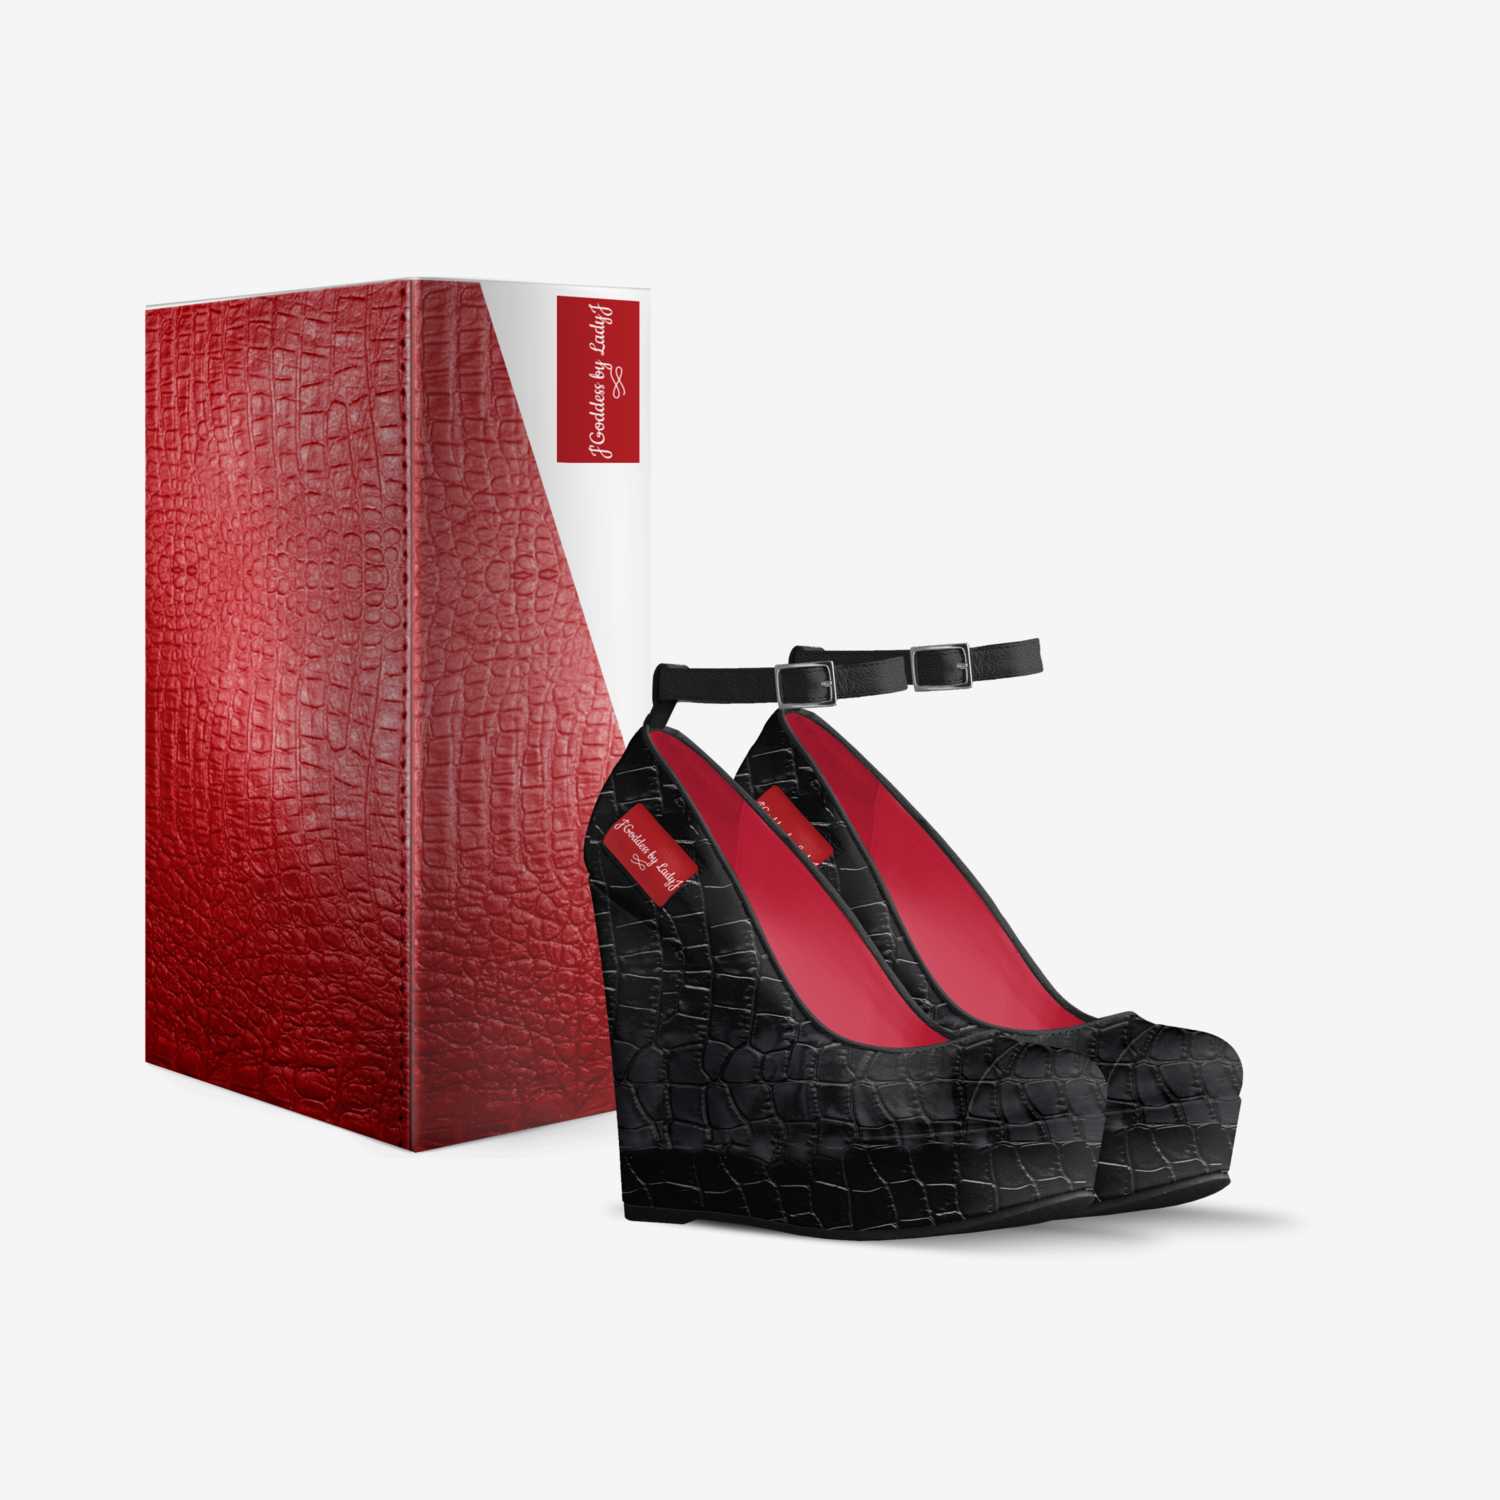 J'Goddess by LadyJ custom made in Italy shoes by Tawana Jones | Box view